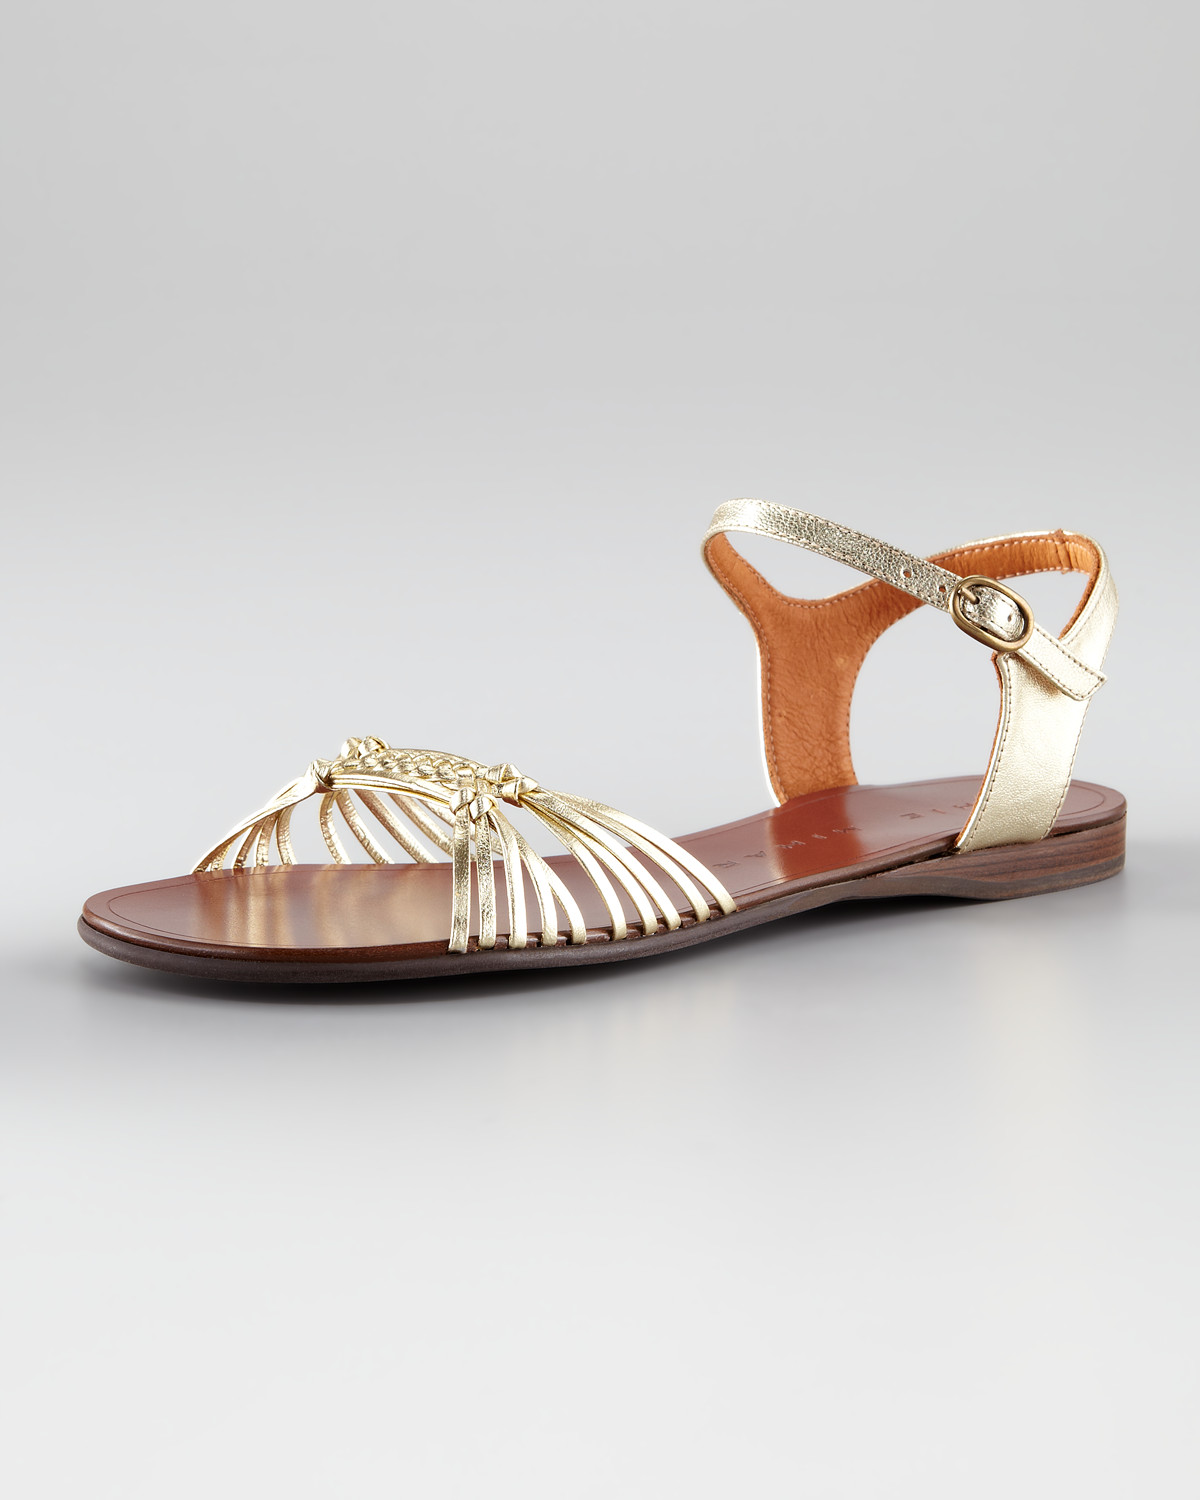 Chie Mihara Wandia Flat Sandal in Gold (Metallic) - Lyst